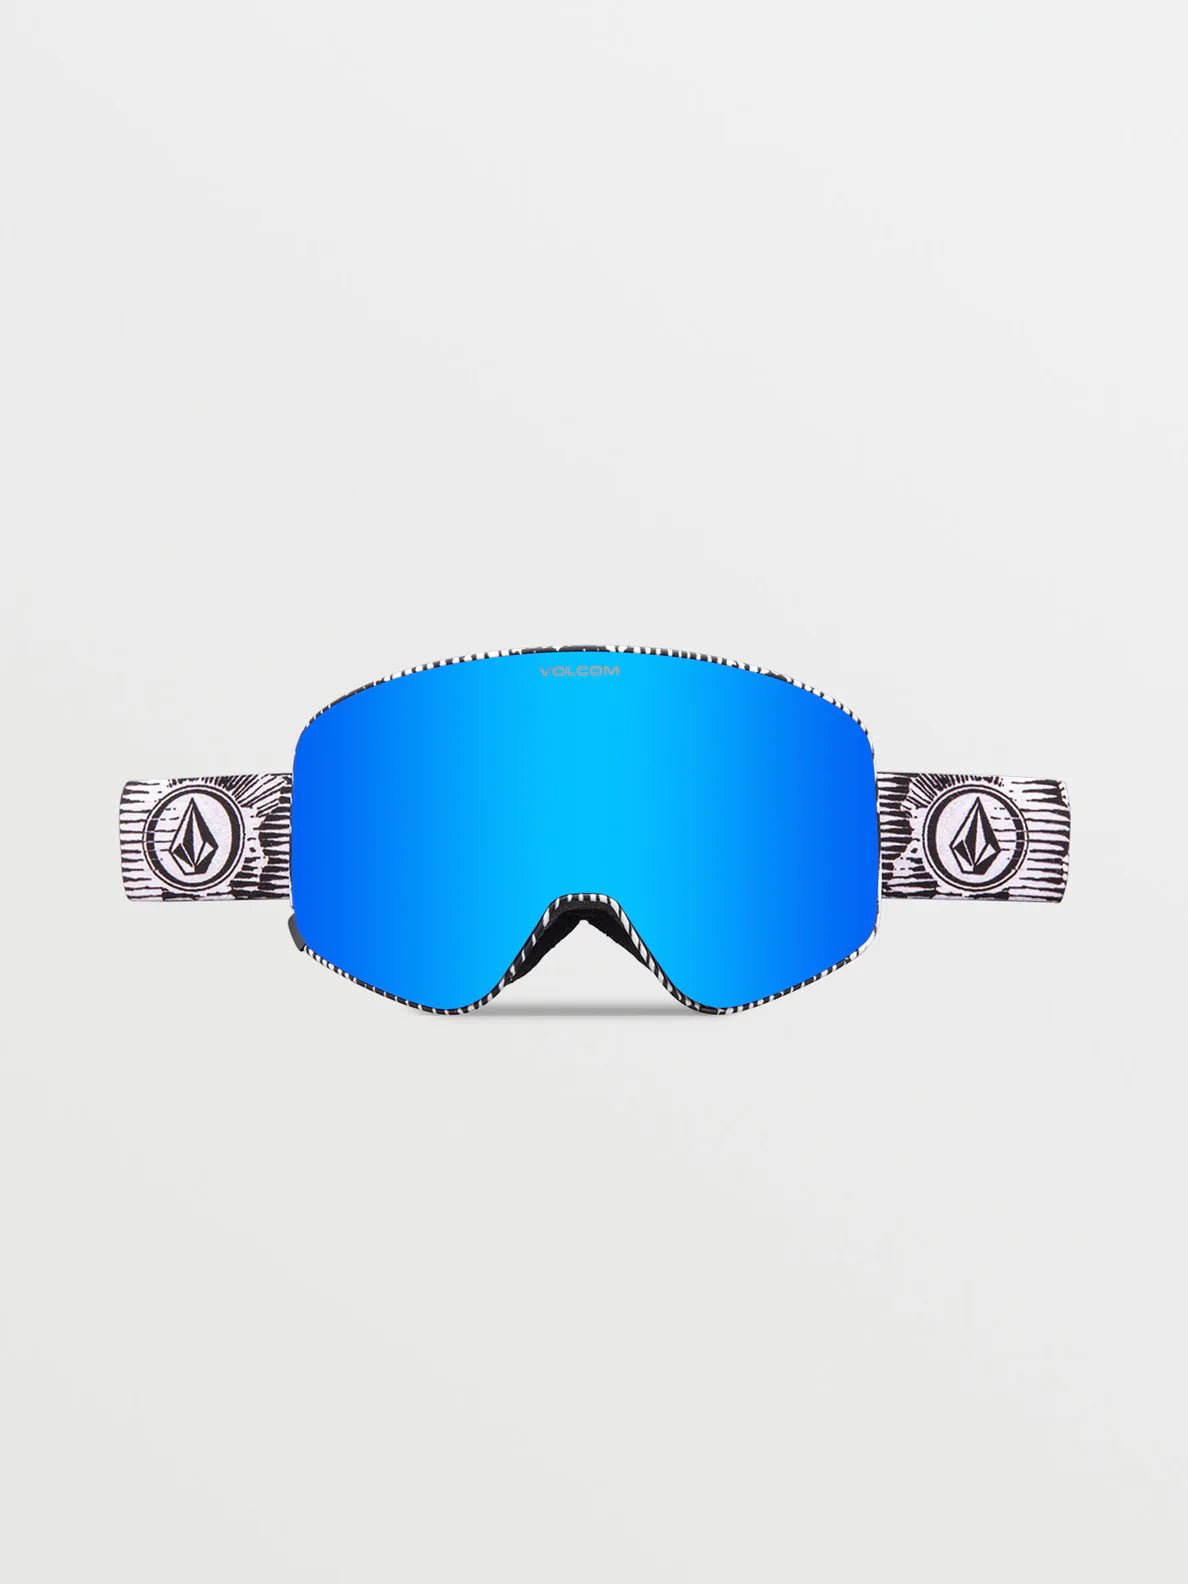 VOLCOM ODYSSEY Snowboard Goggle